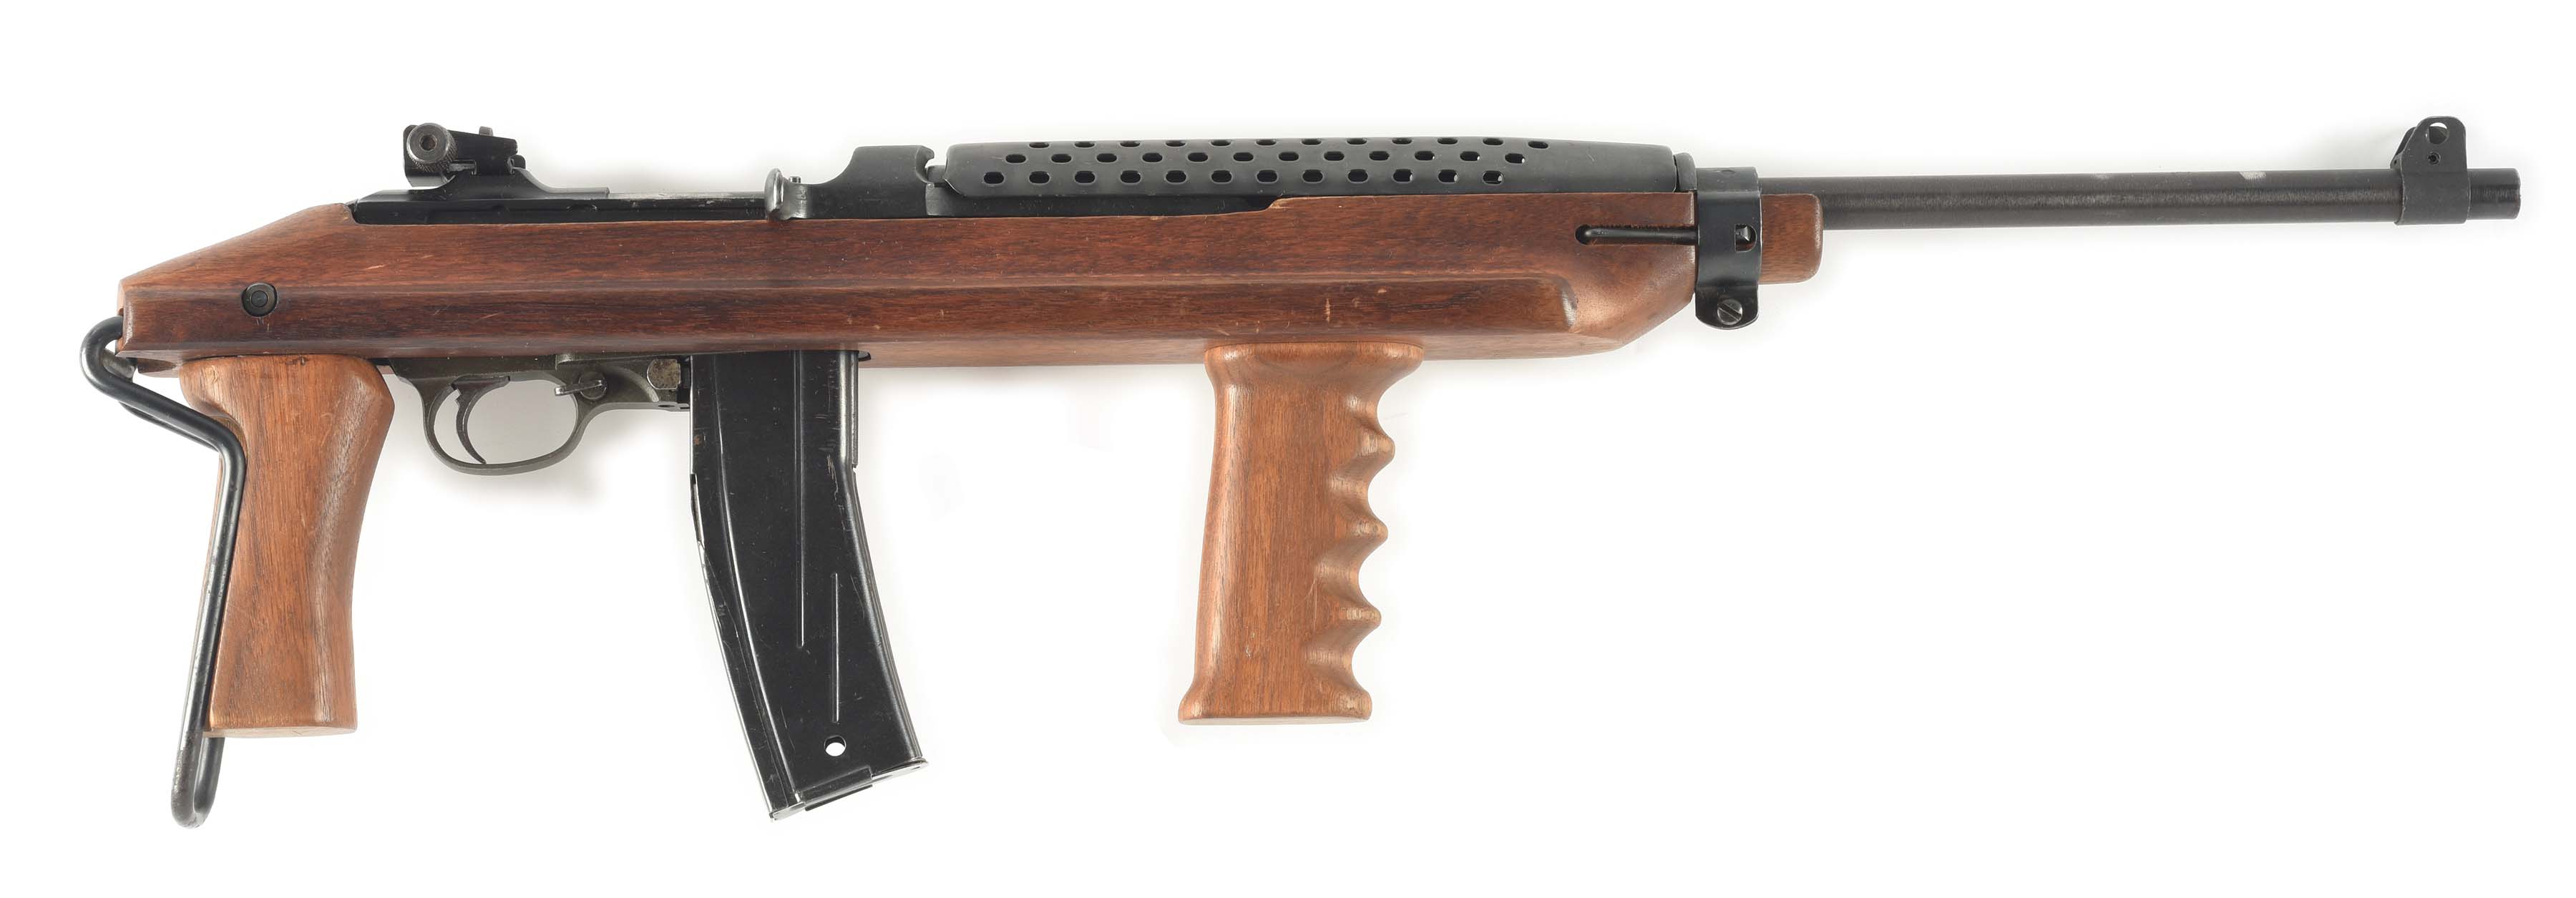 N) very popular and fun plainfield M2 carbine machine gun in wooden stock w...